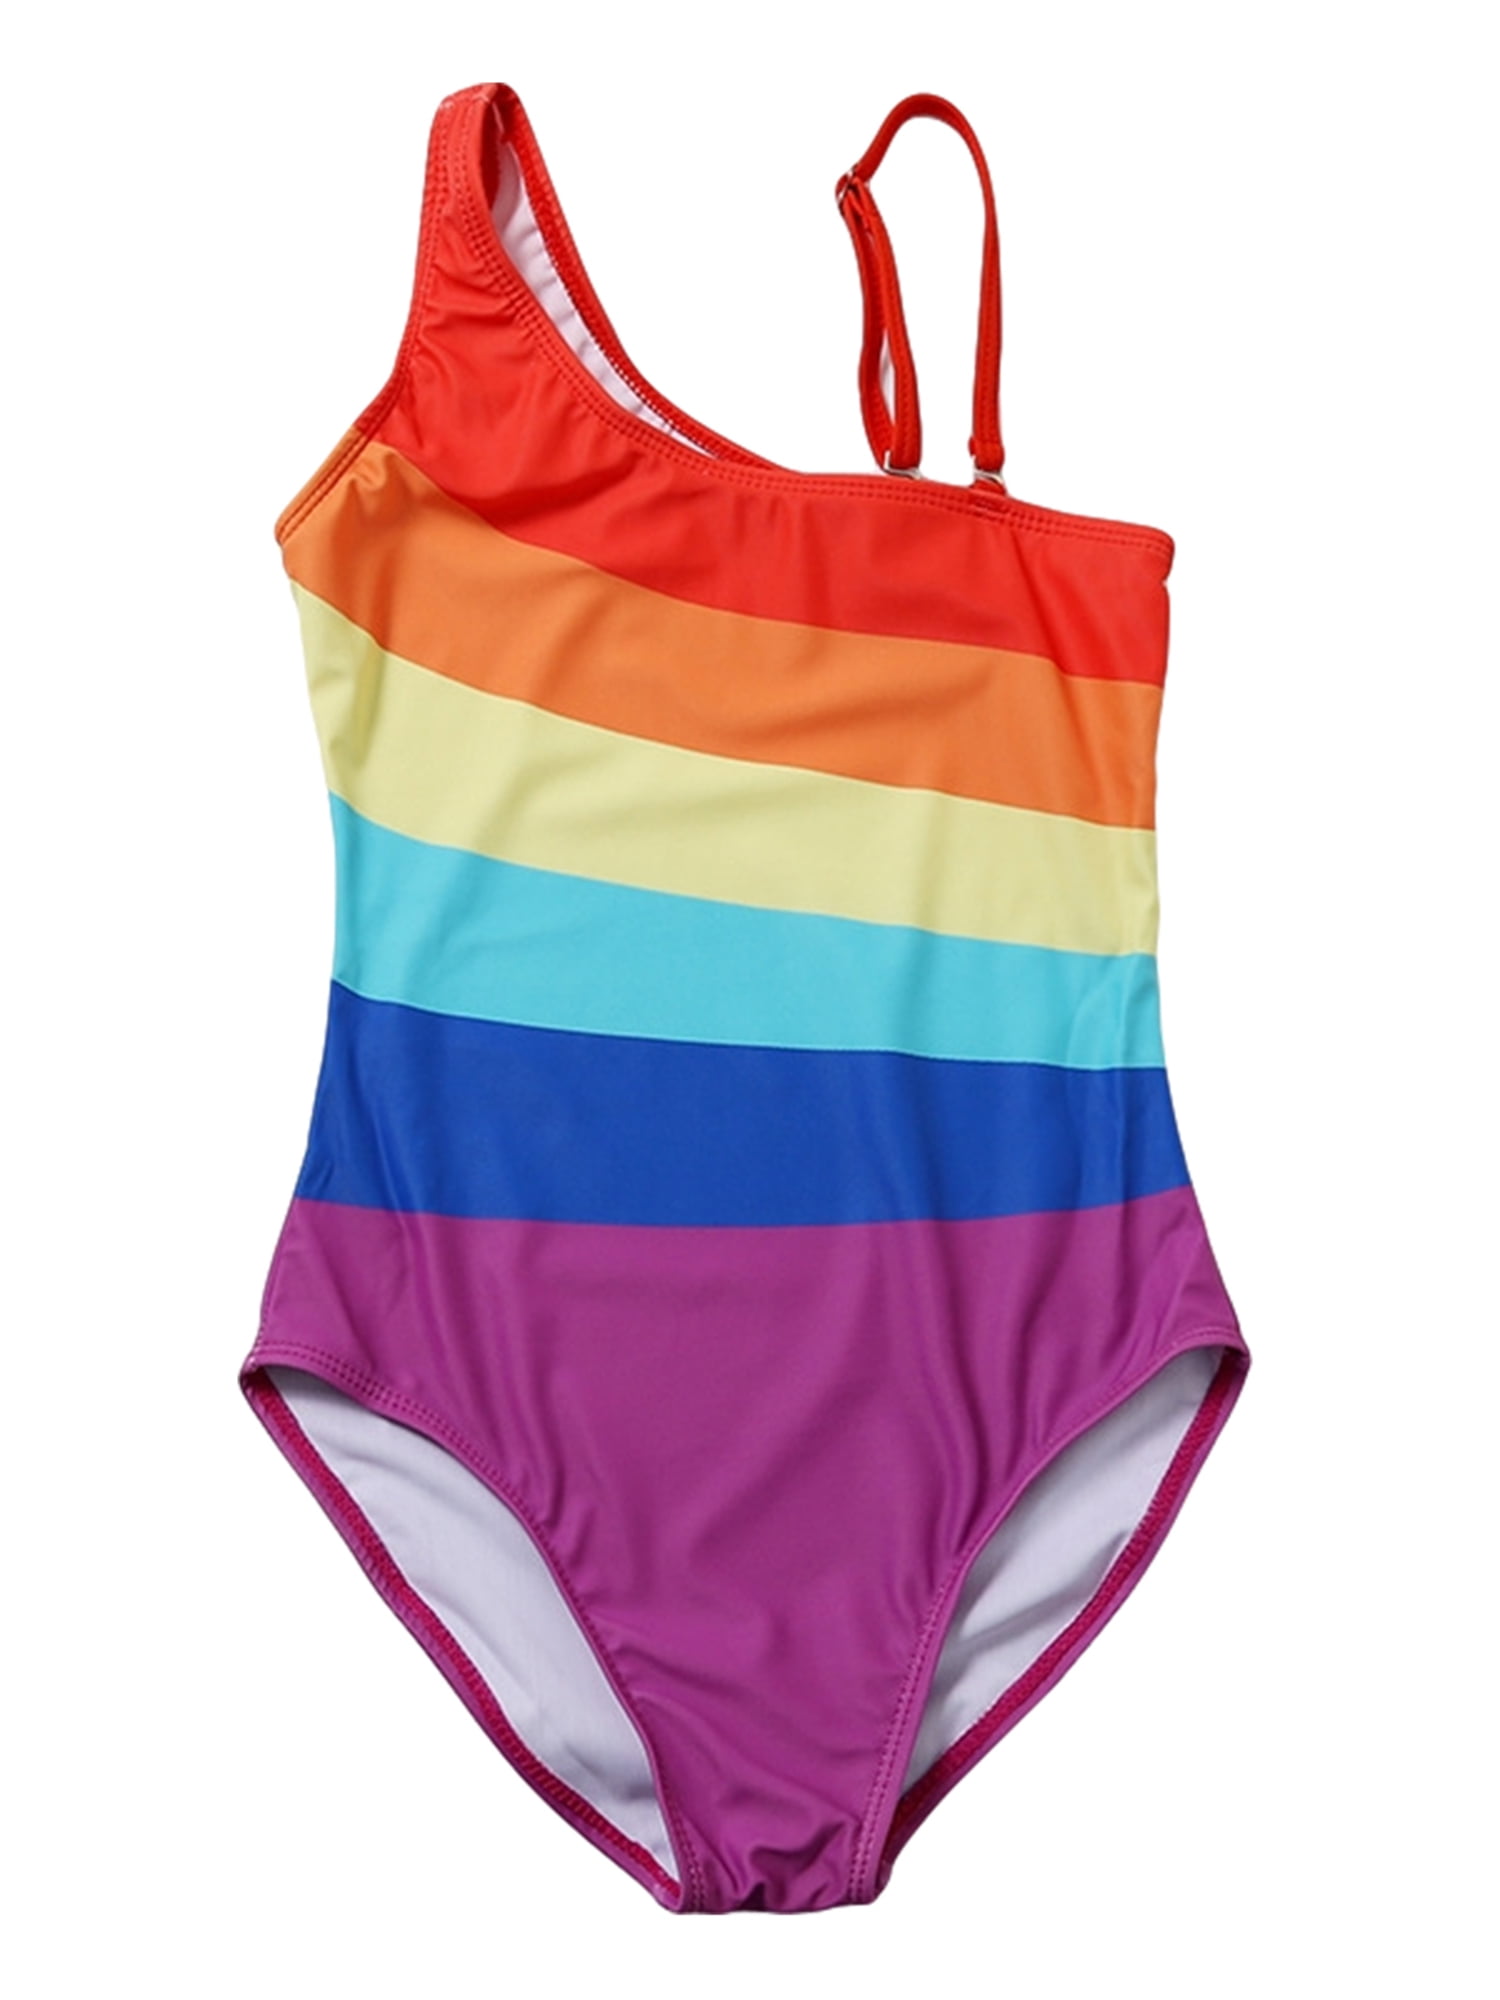 Girls Swimming Costume Two Piece Tankini Swimsuit Rainbow Stripes Bathing Suit Swimwear 